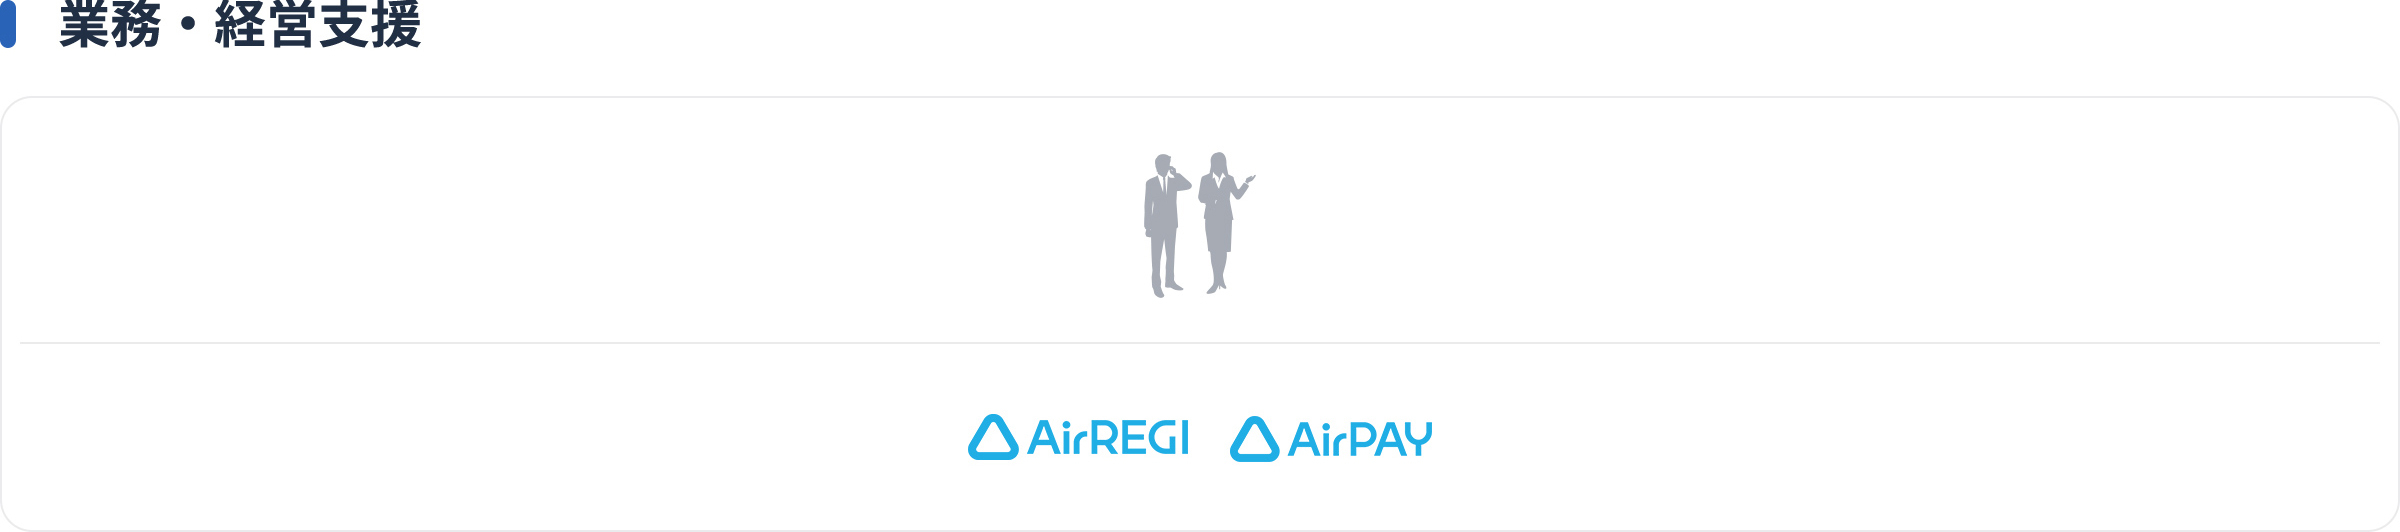 SaaSソリューションとして、Air REGI、Air PAYを展開している